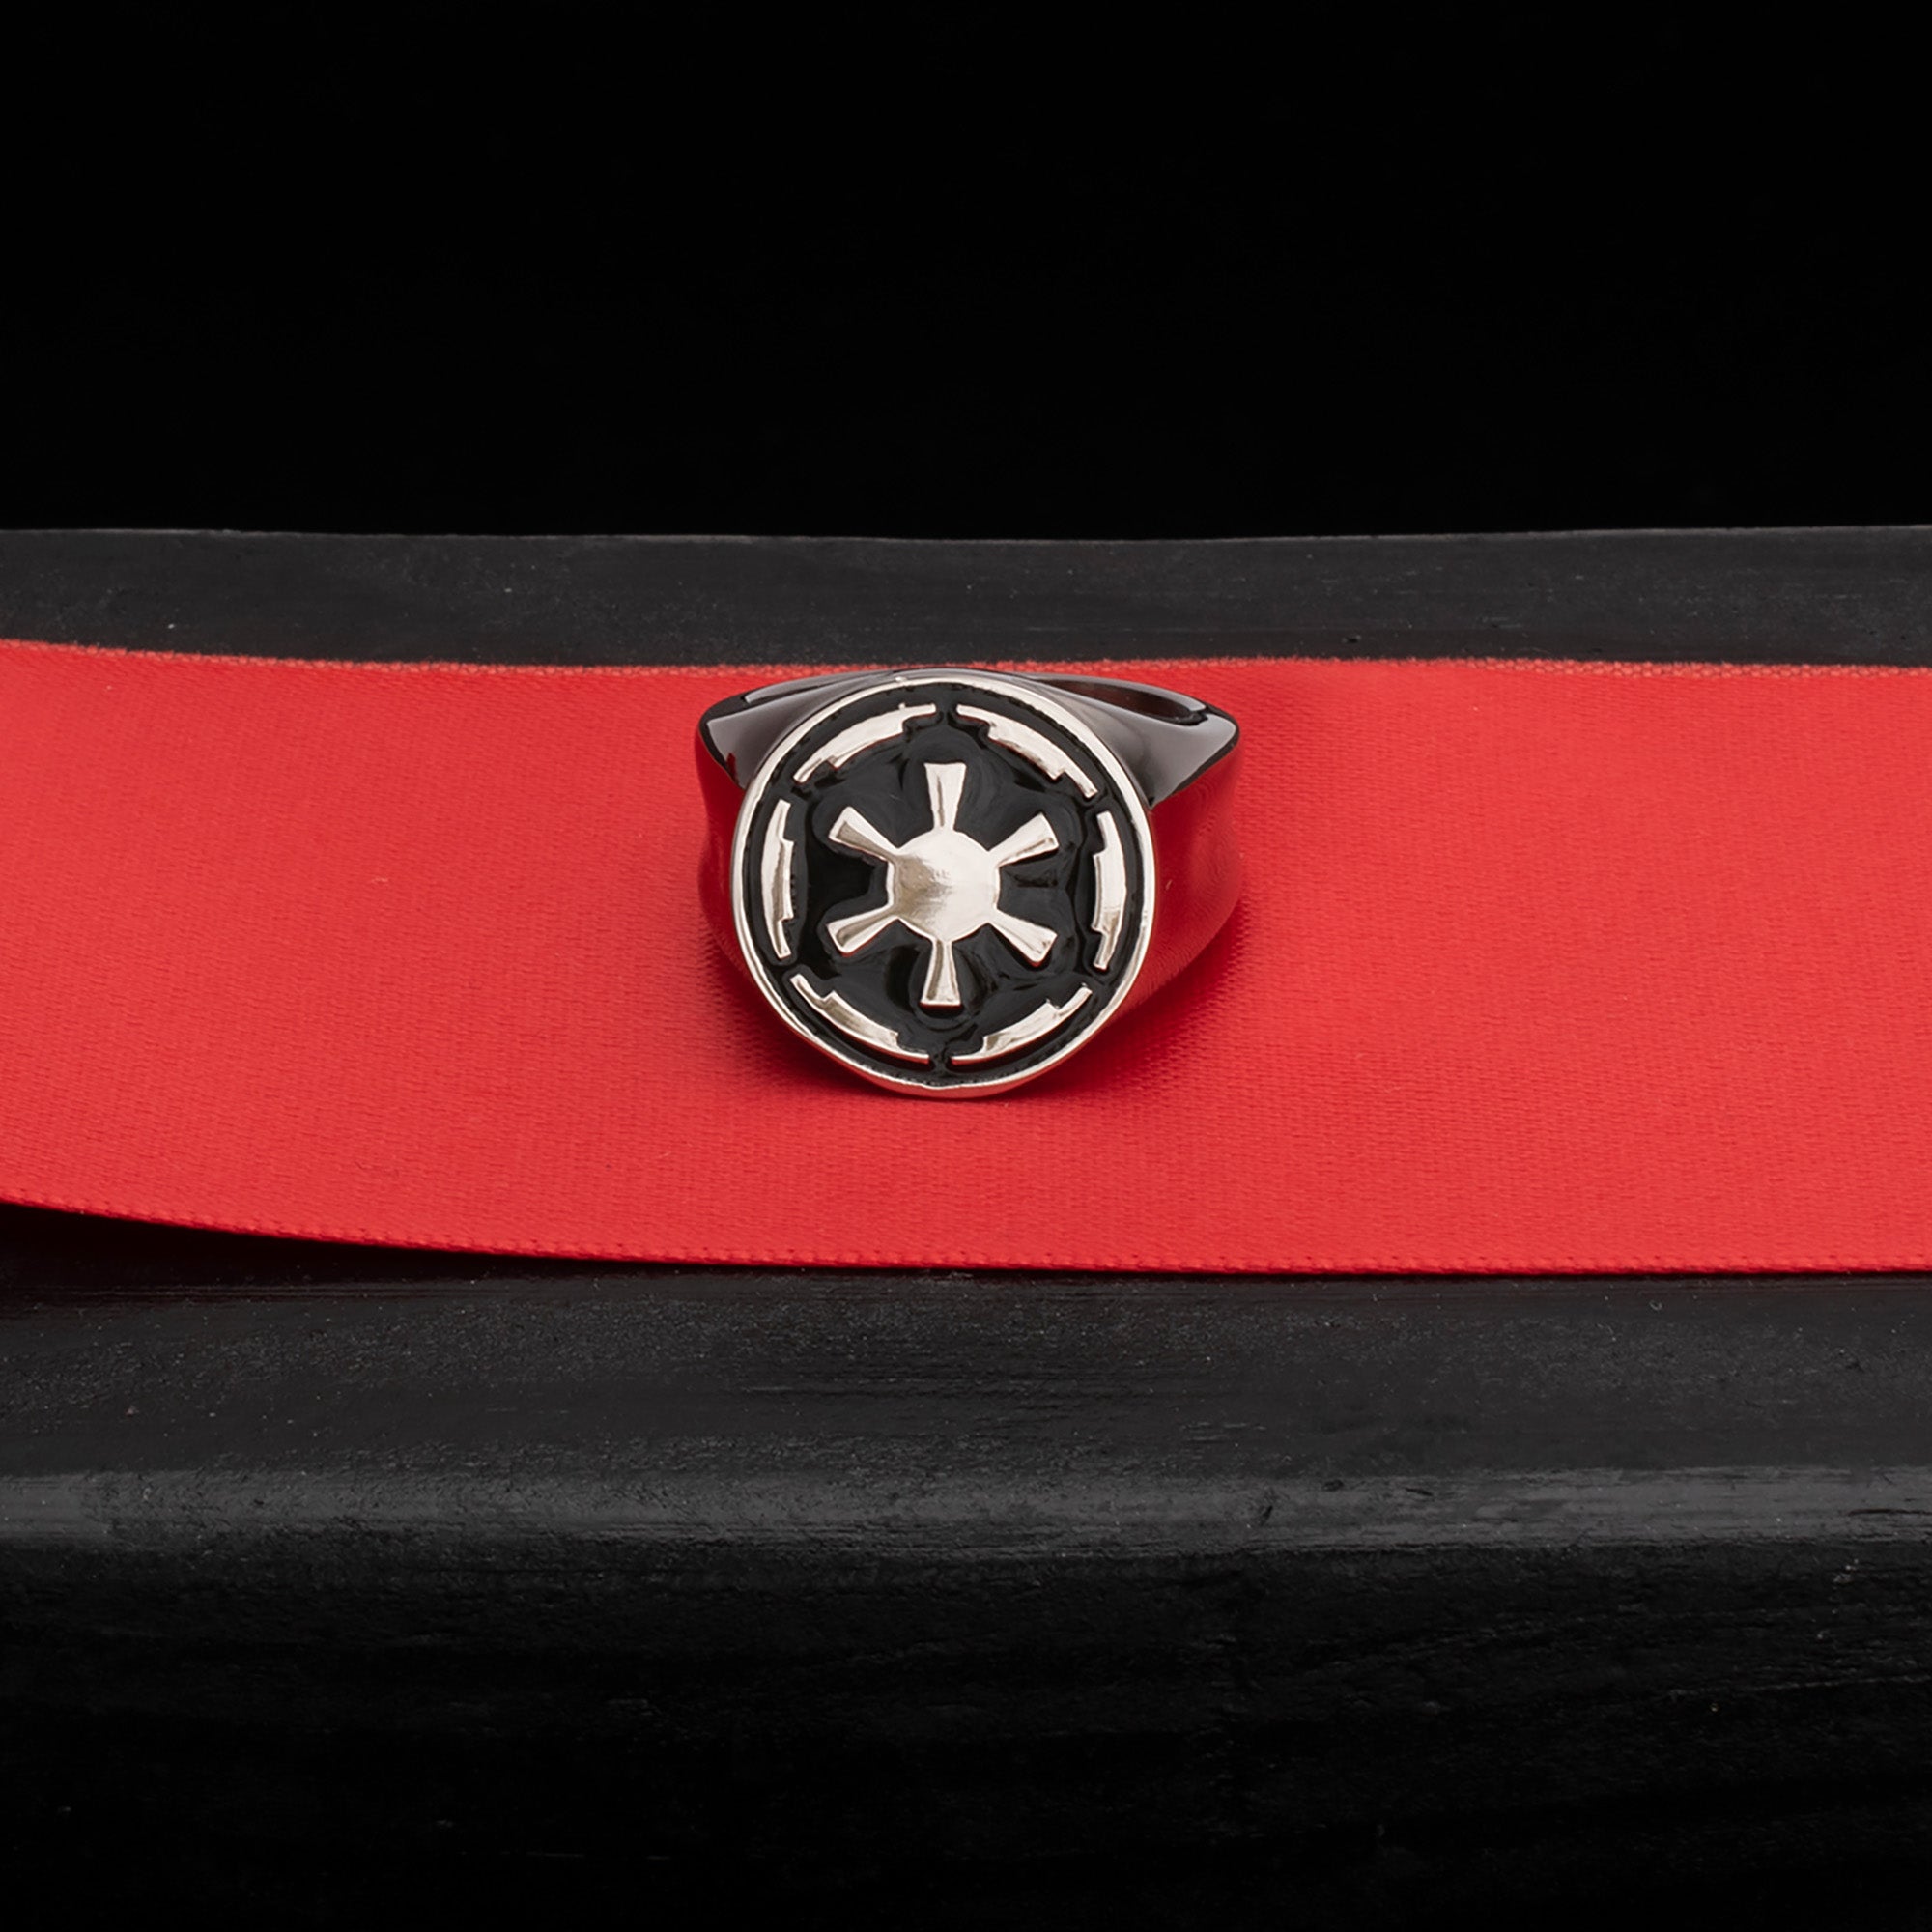 Star Wars Galactic Empire Symbol Ring